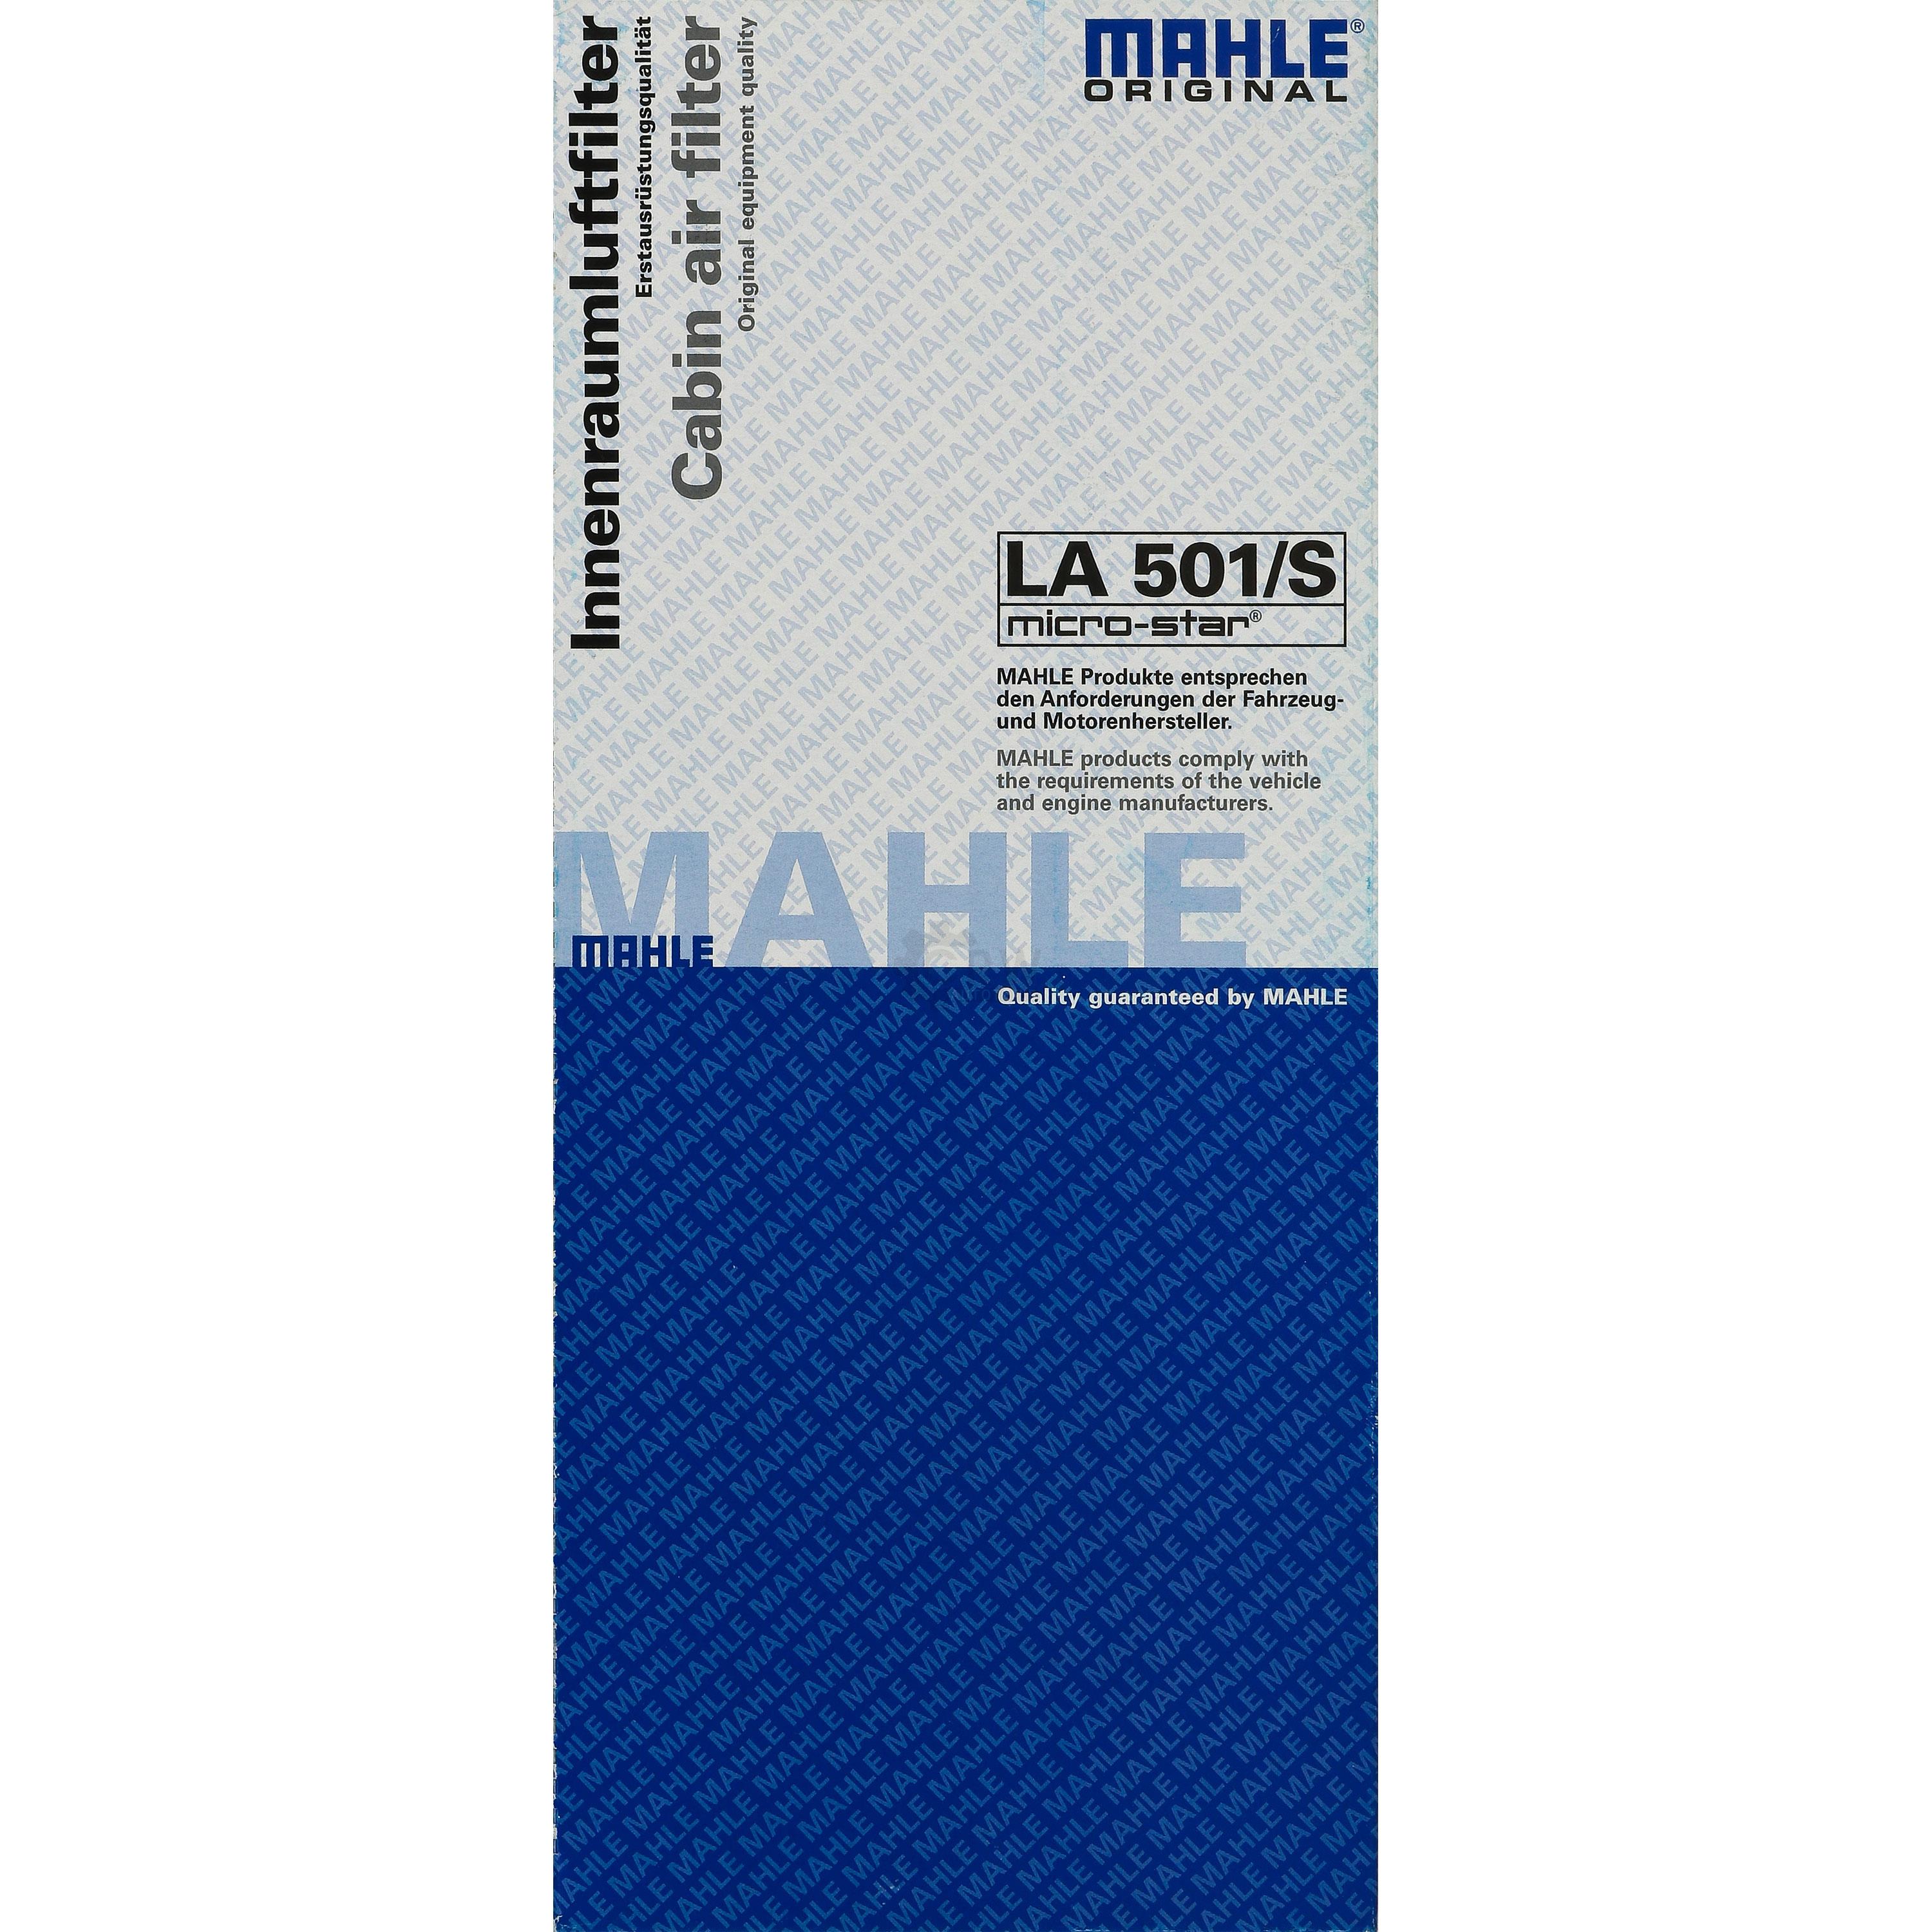 MAHLE / KNECHT Innenraumfilter Innenraumluft Pollenfilter LA 501/S